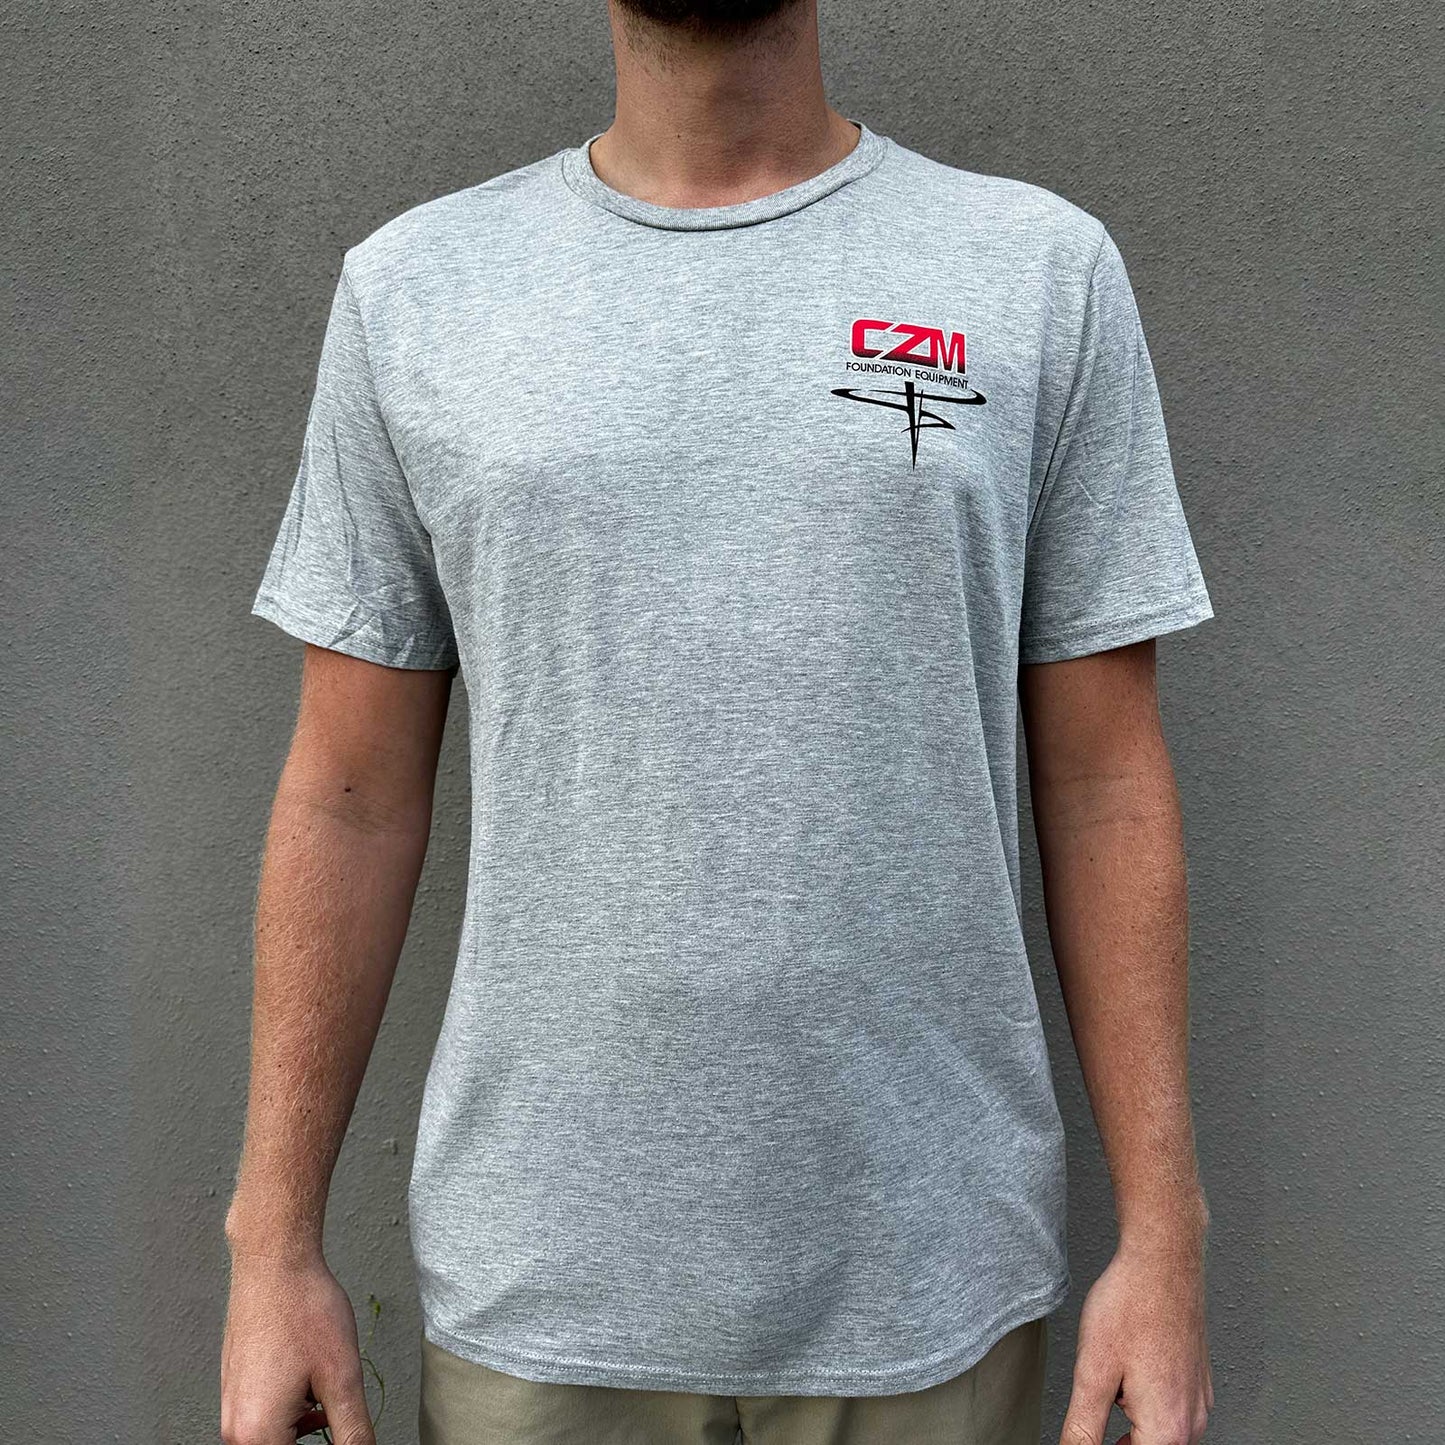 CZM EK300LS Short Sleeve T-Shirt